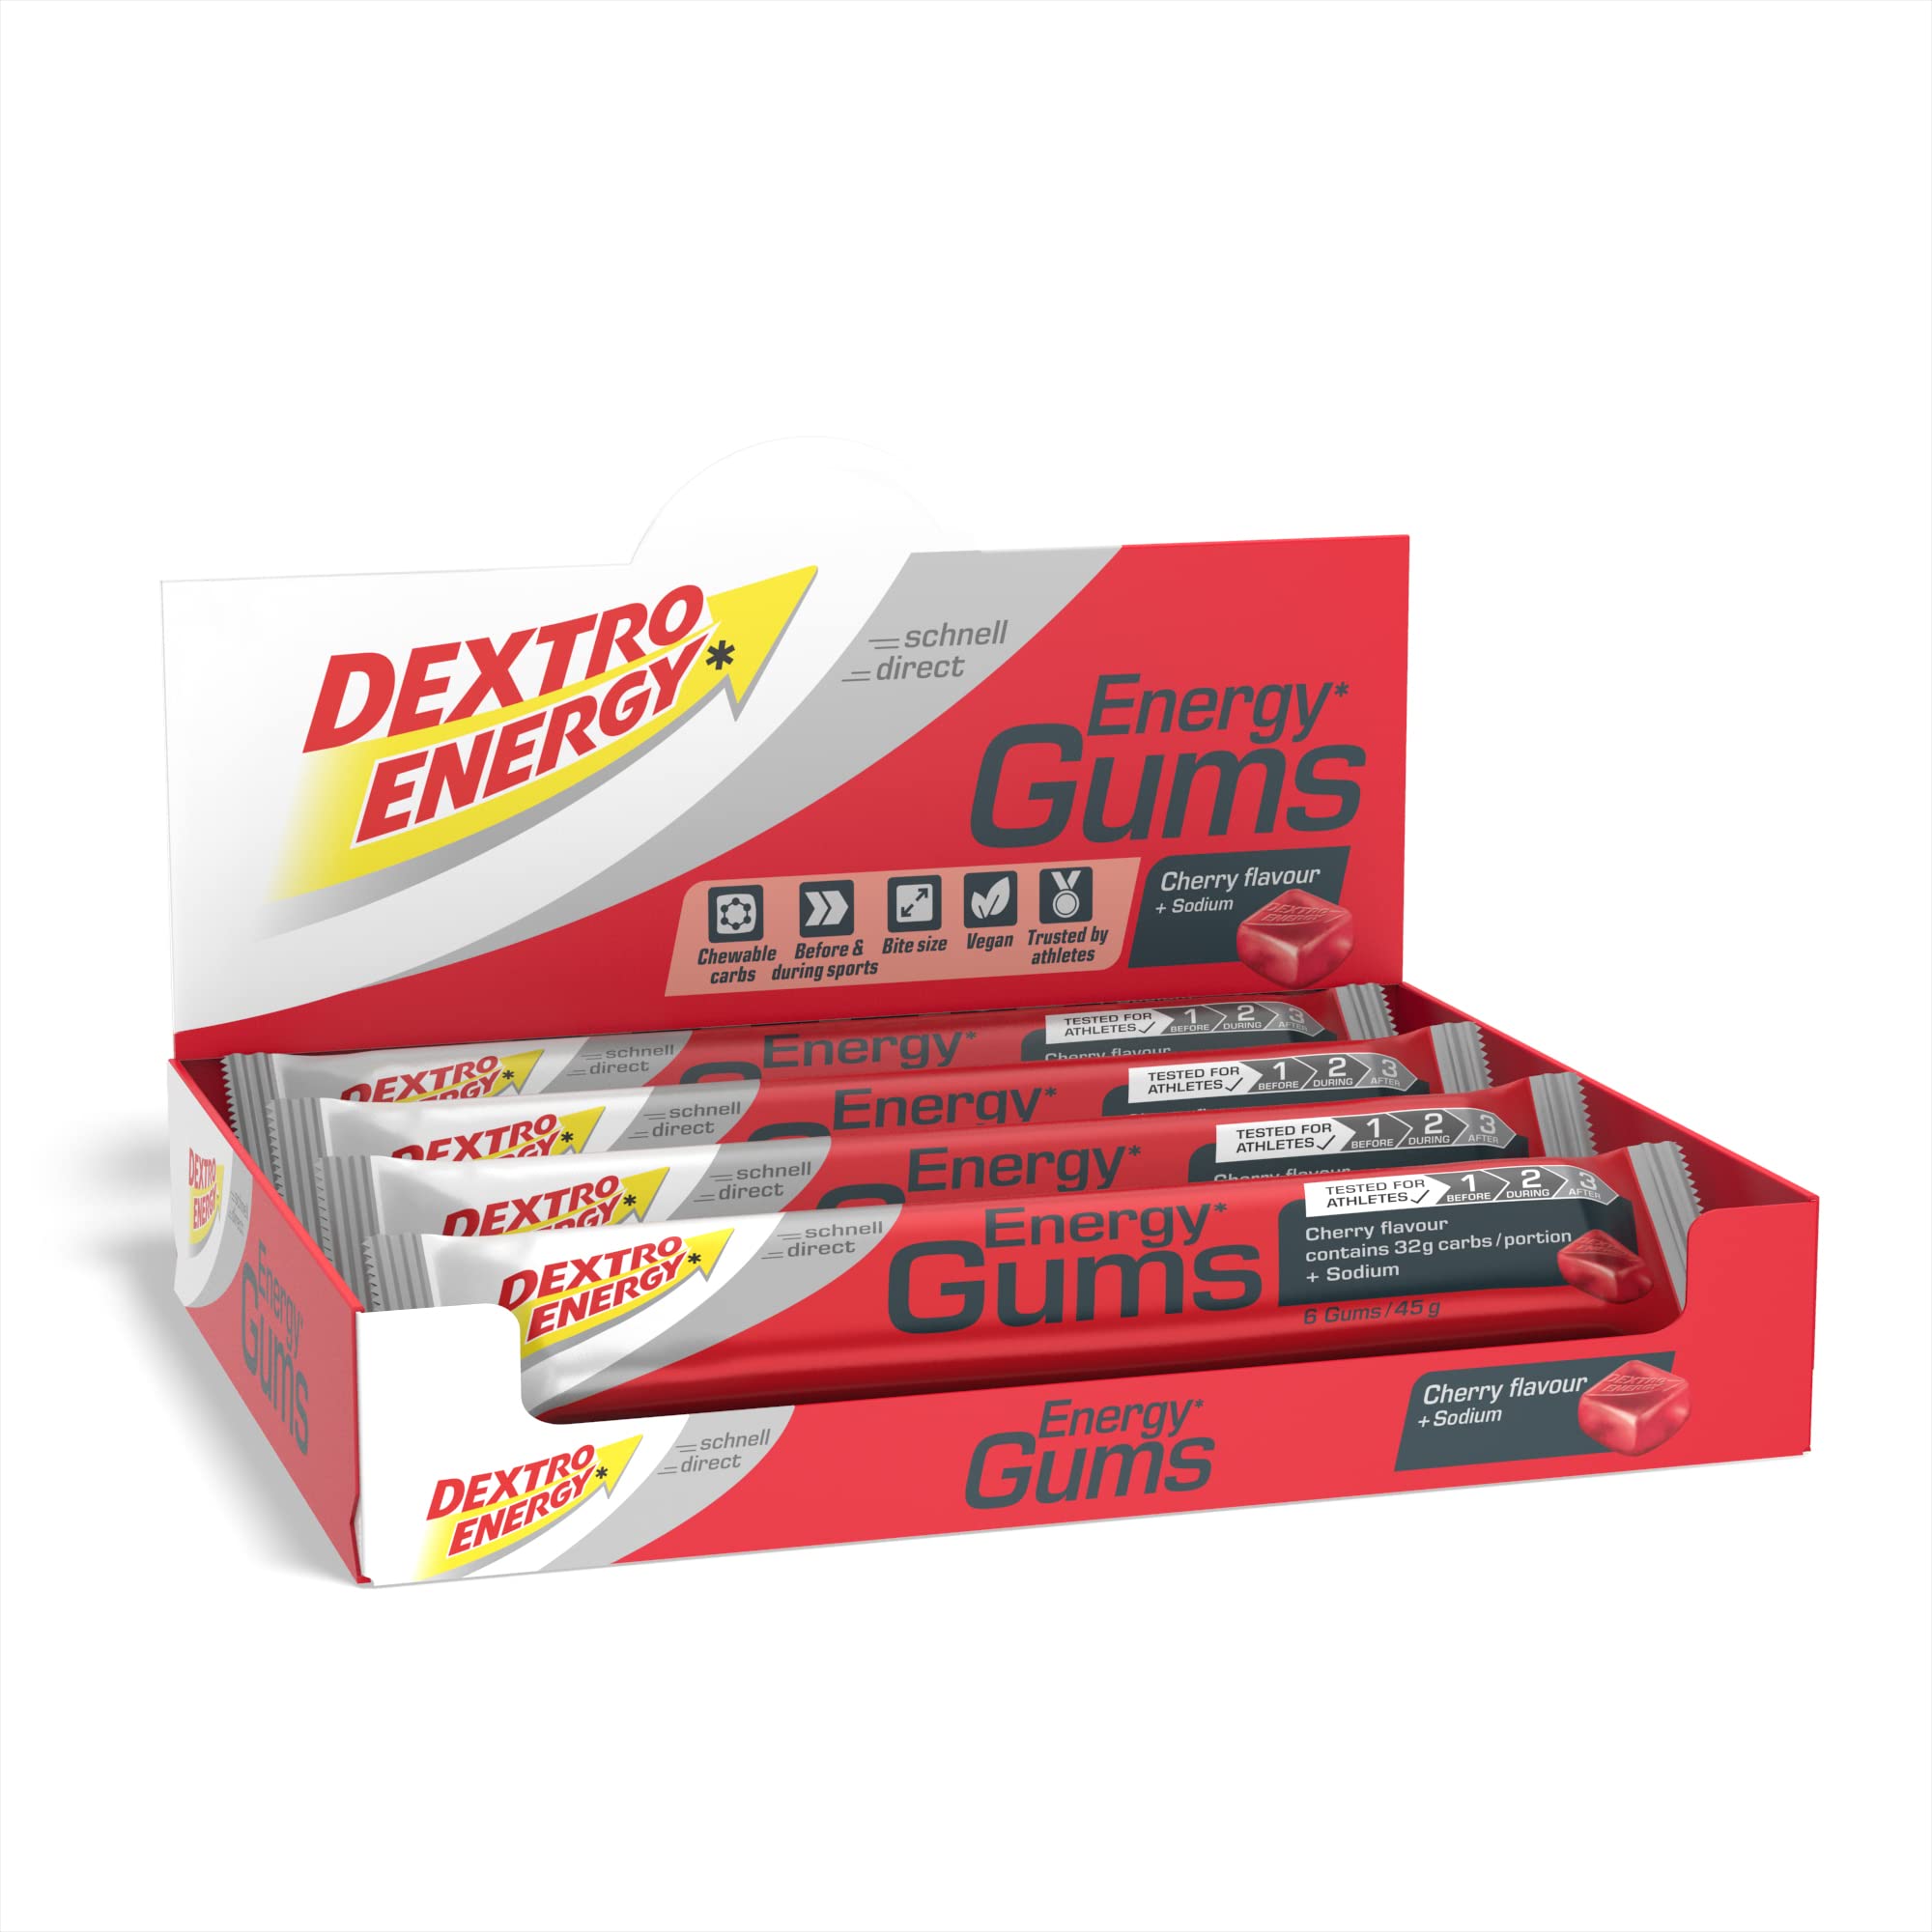 Dextro Energy Energy Gums | Cherry + Natrium | leckeres Fruchtgummi für Ausdauersportler | 15x45g | Vegan